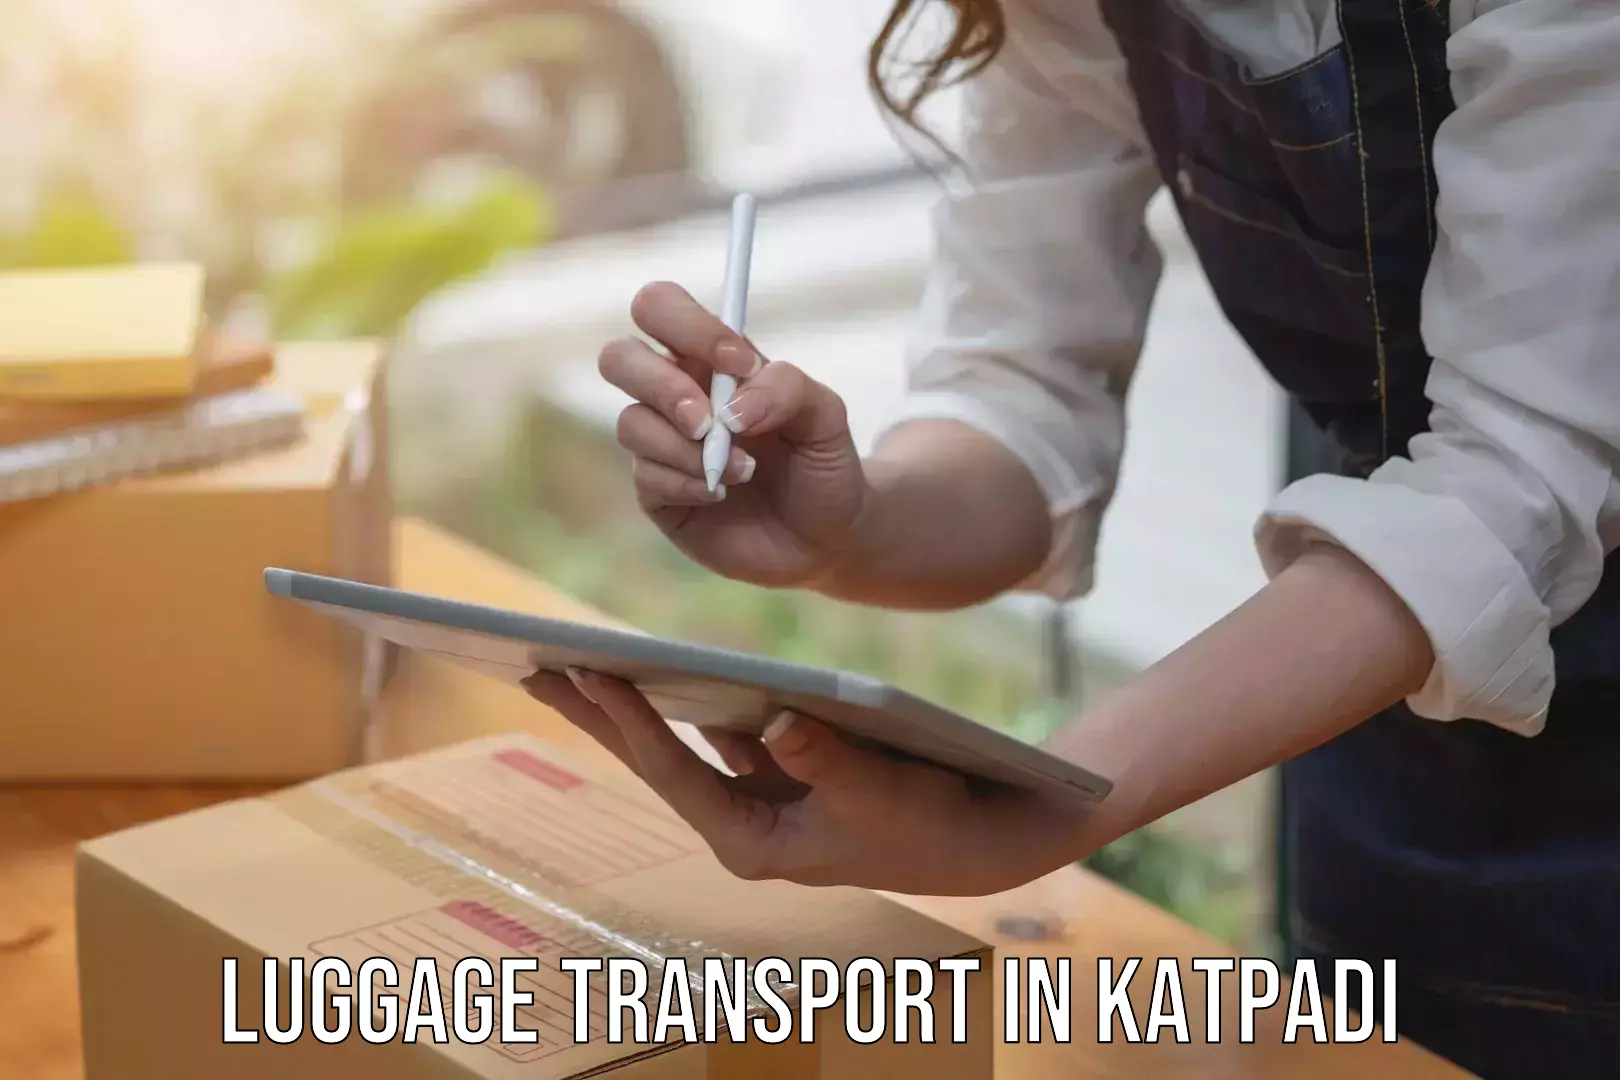 Professional baggage transport in Katpadi